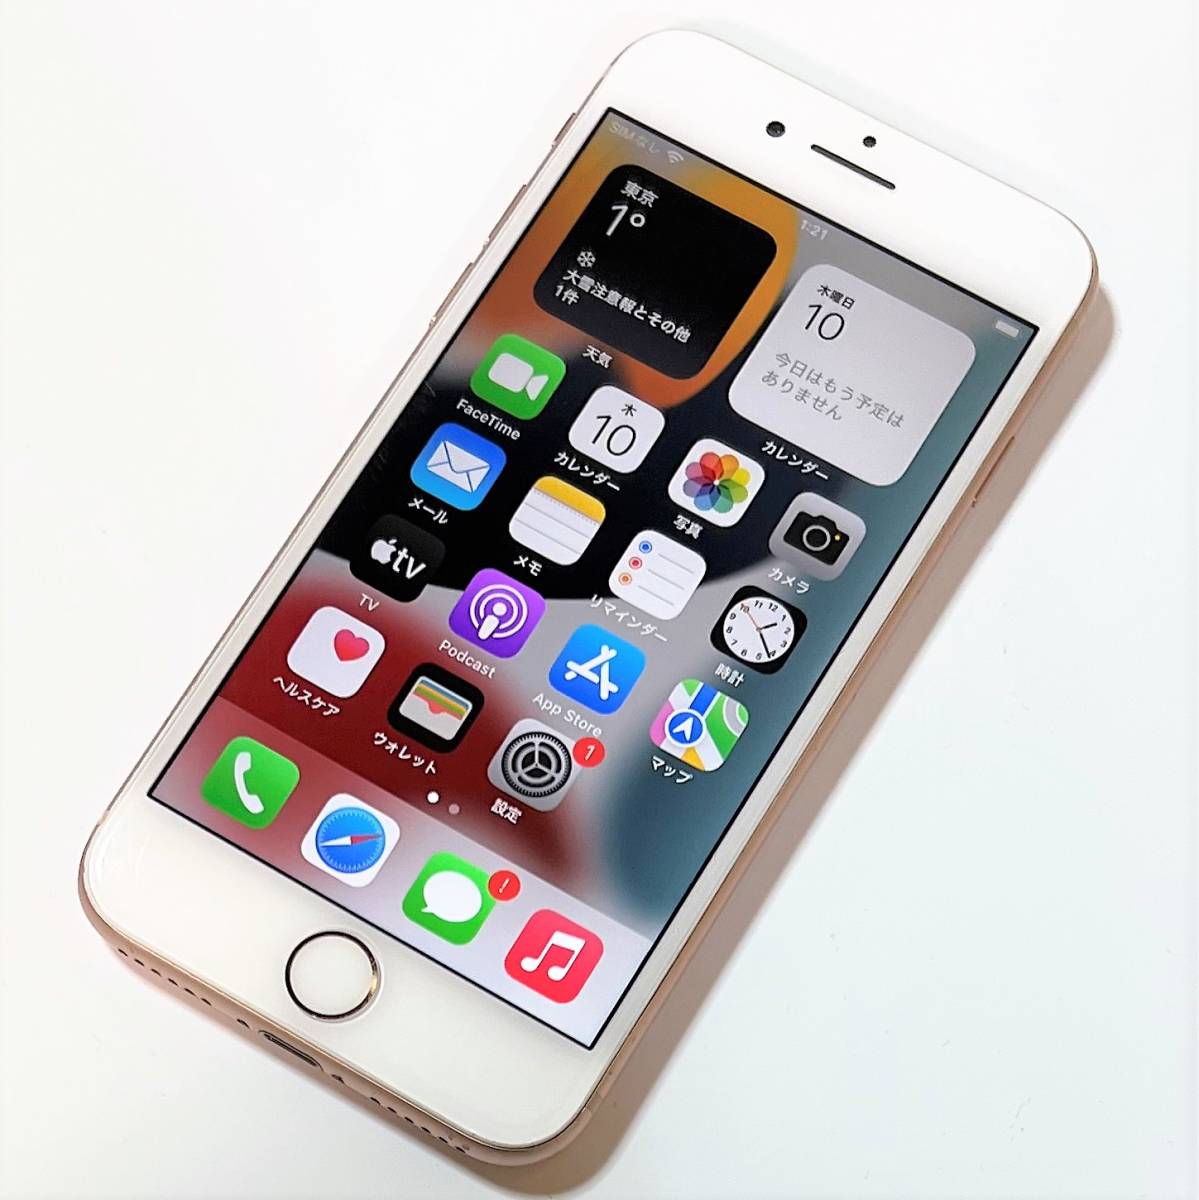 Apple SIMフリー iPhone ゴールド 256GB MQ862J/A iOS15.3 格安SIM MVNO 海外利用可能  アクティベーションロック解除済